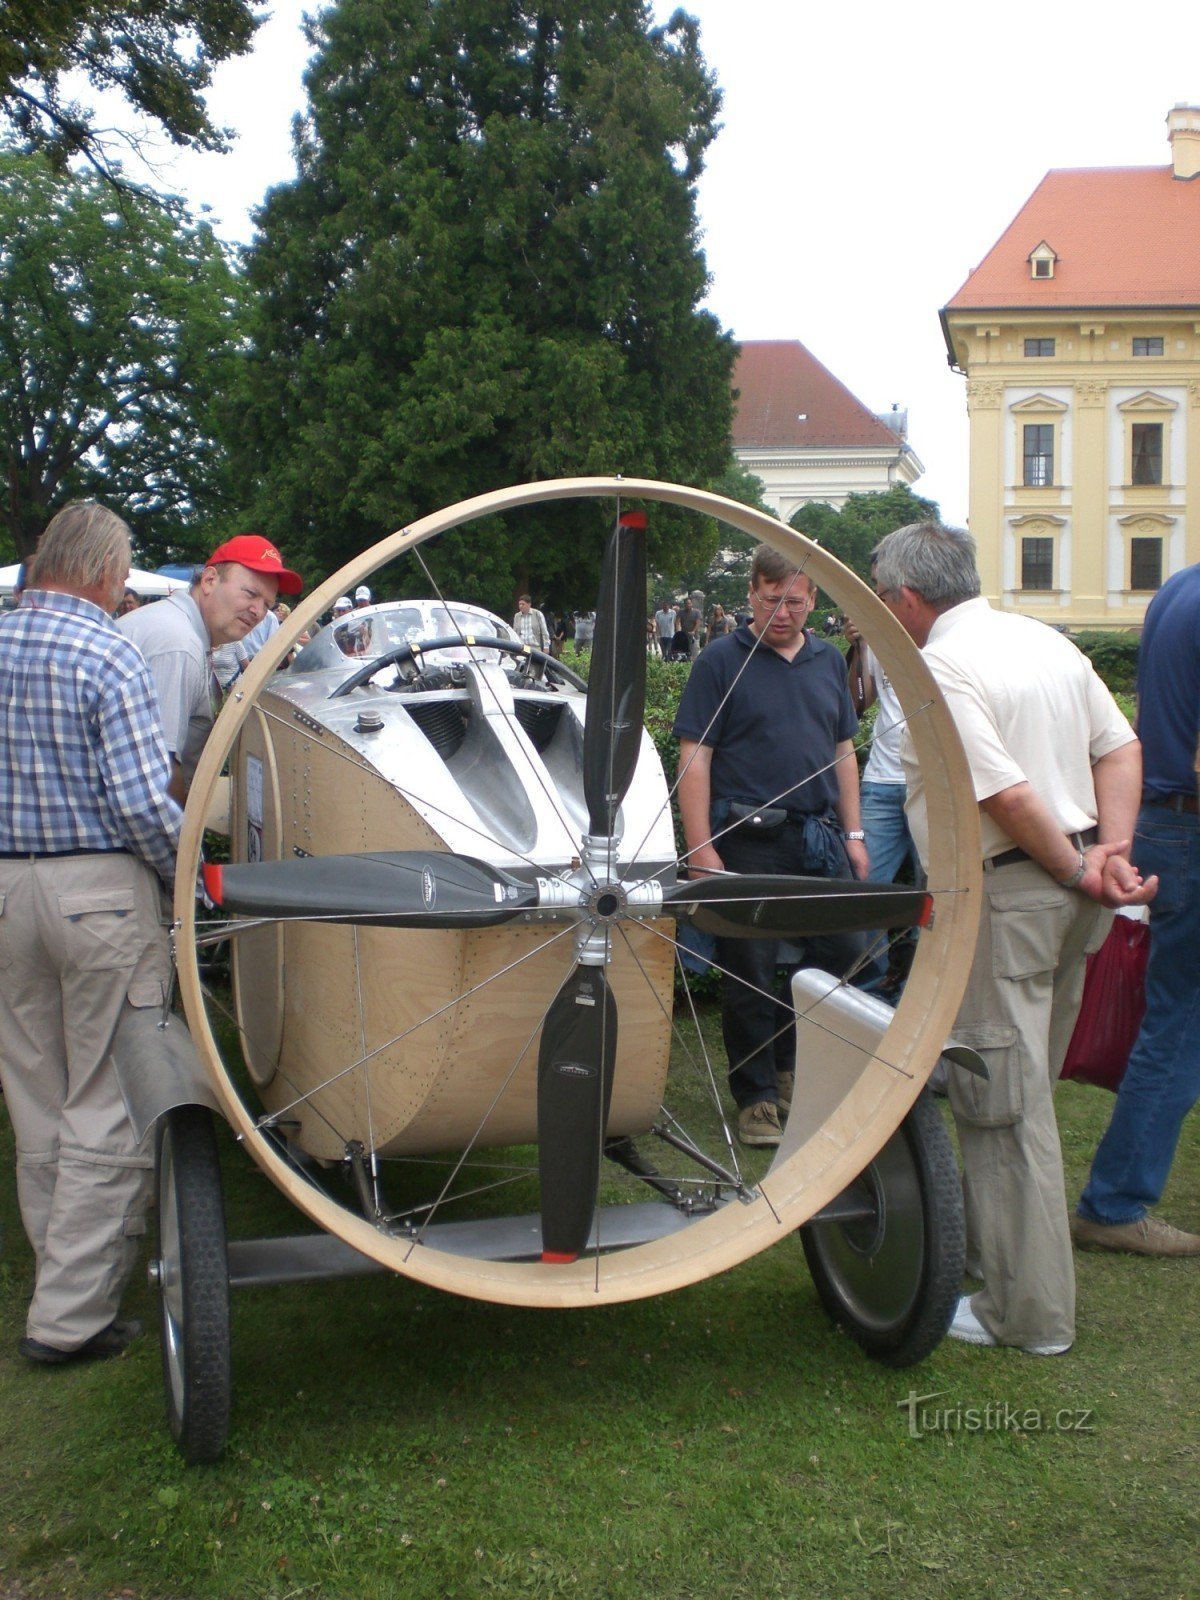 Oldtimer festival Slavkov near Brno